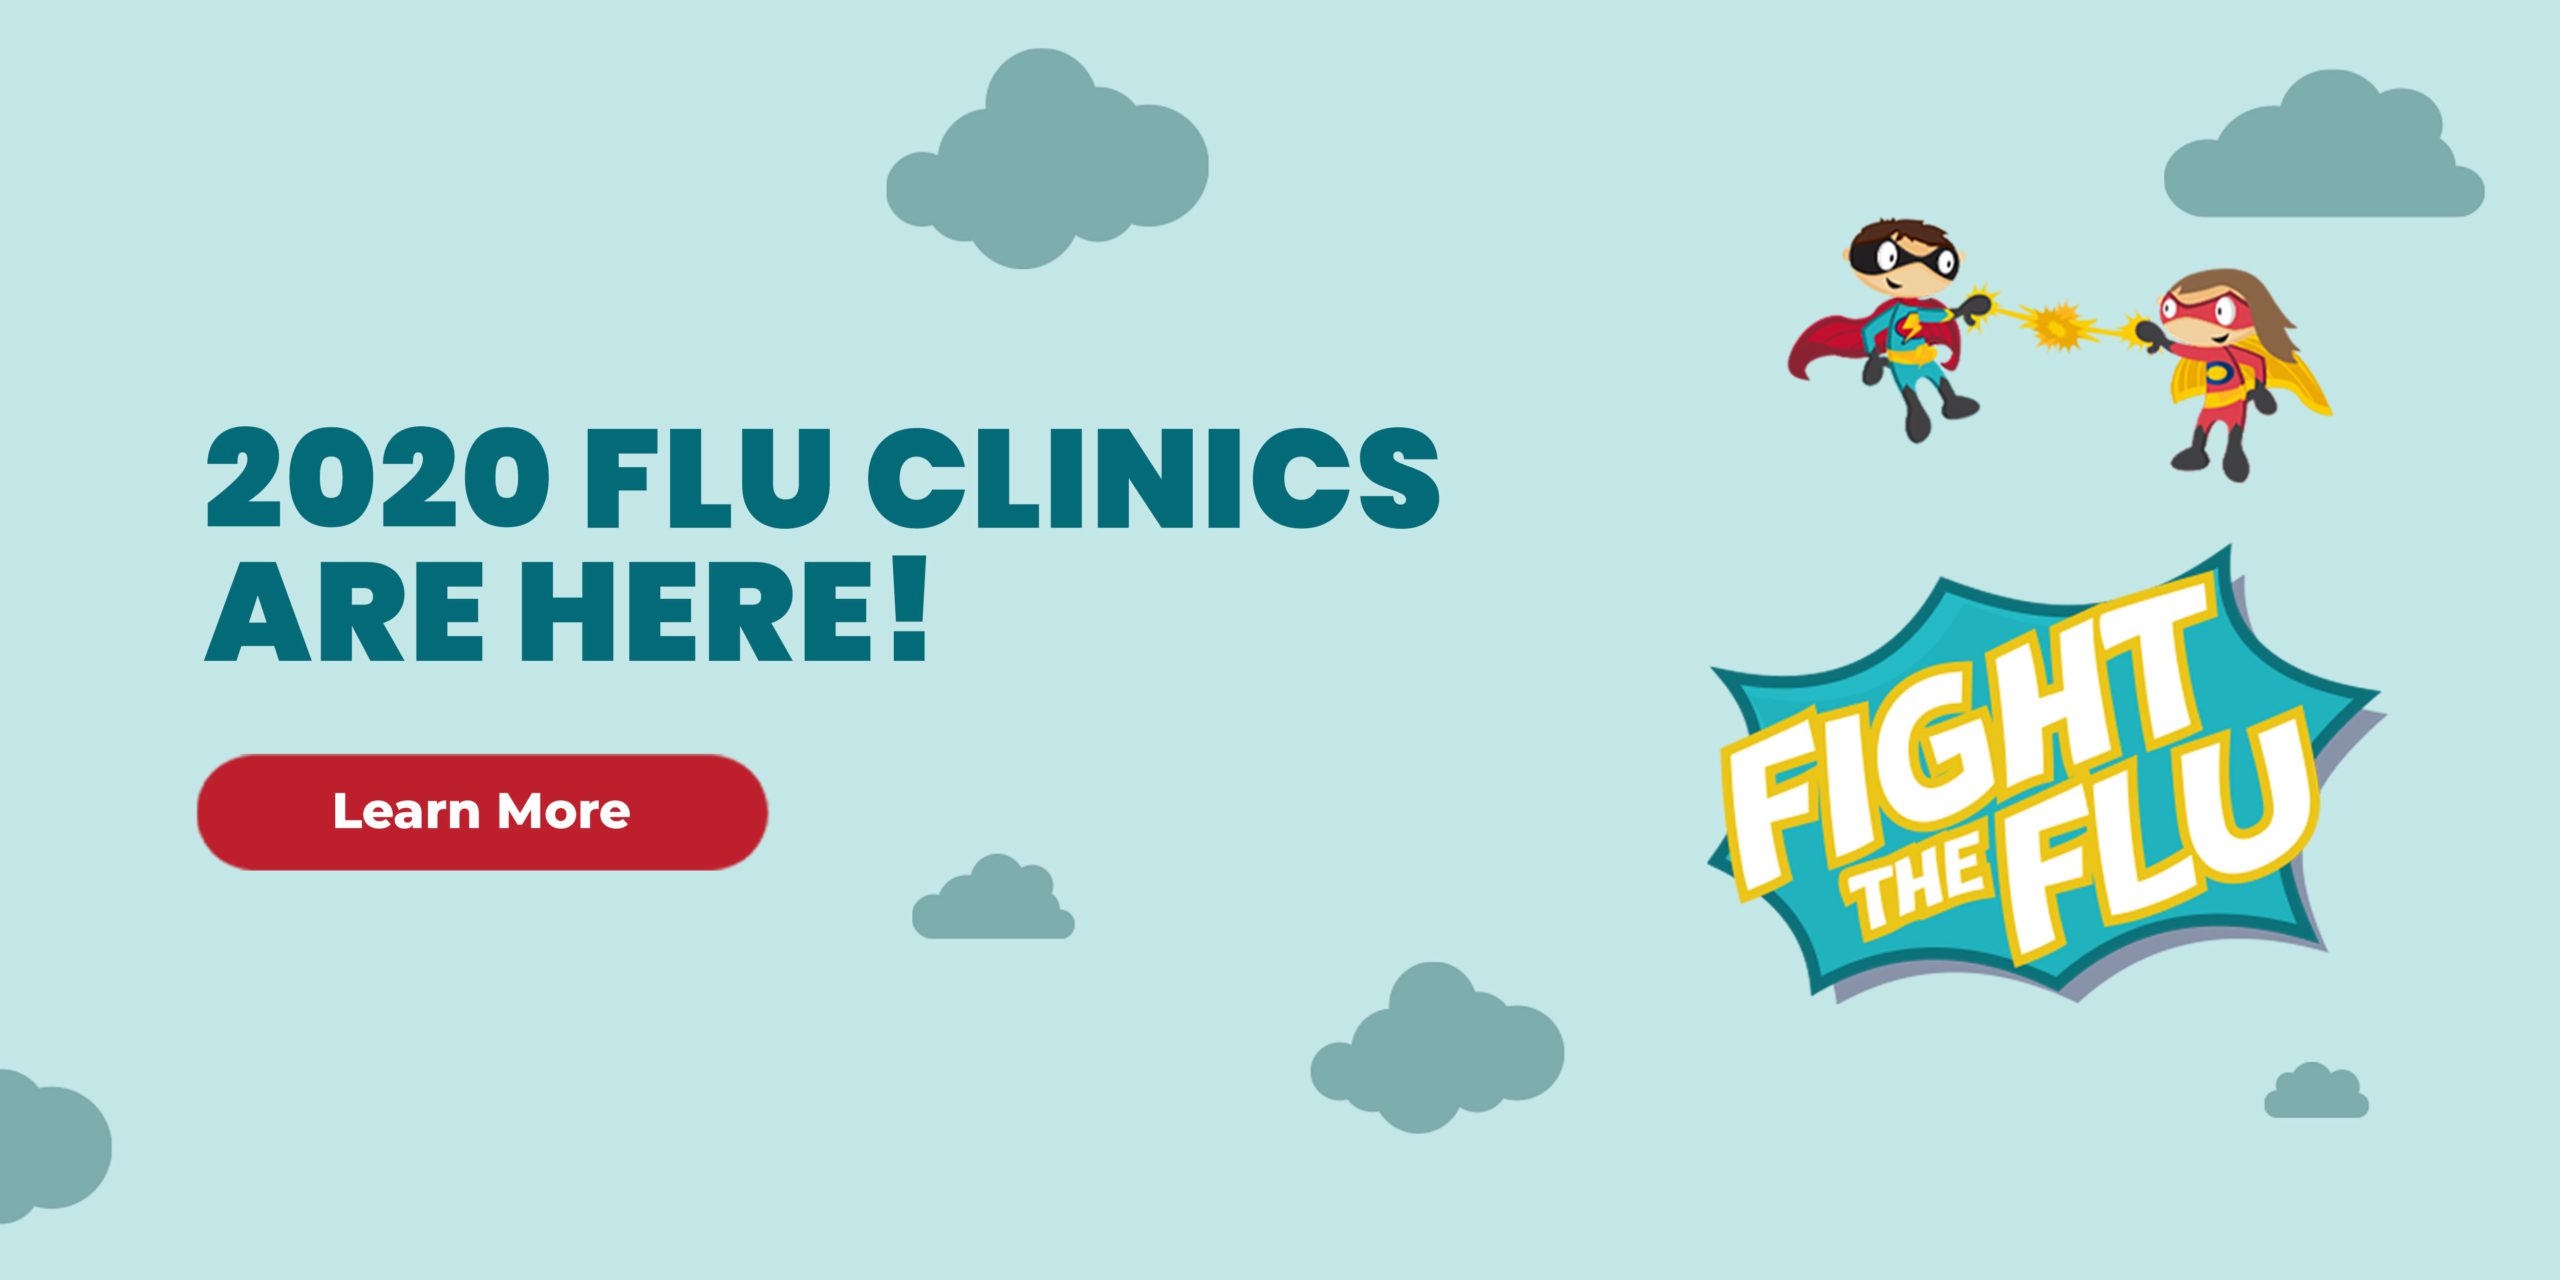 Express Flu Clinics Are Back!